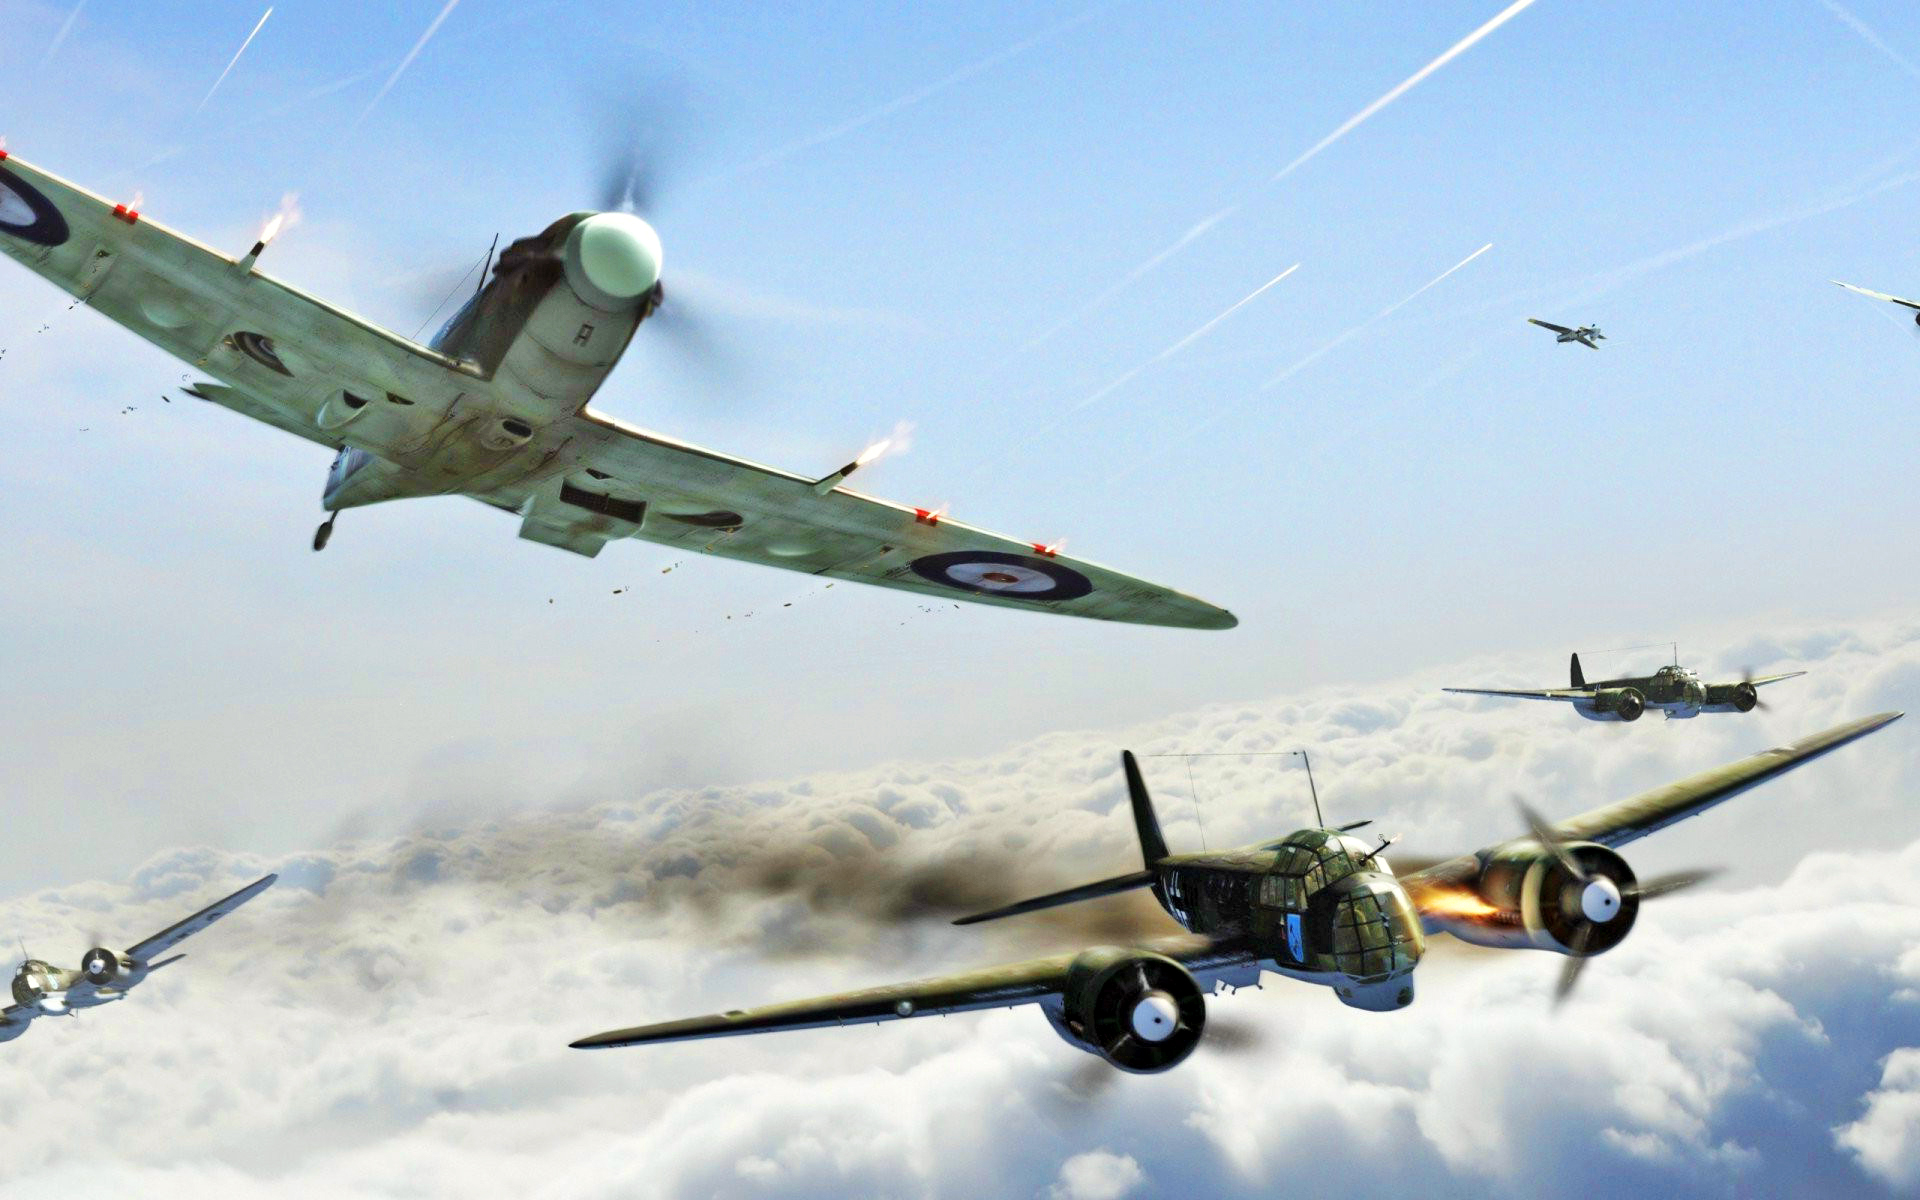 General 1920x1200 vehicle military aircraft World War II British aircraft Supermarine aircraft sky Supermarine Spitfire frontal view clouds flying pilot smoke